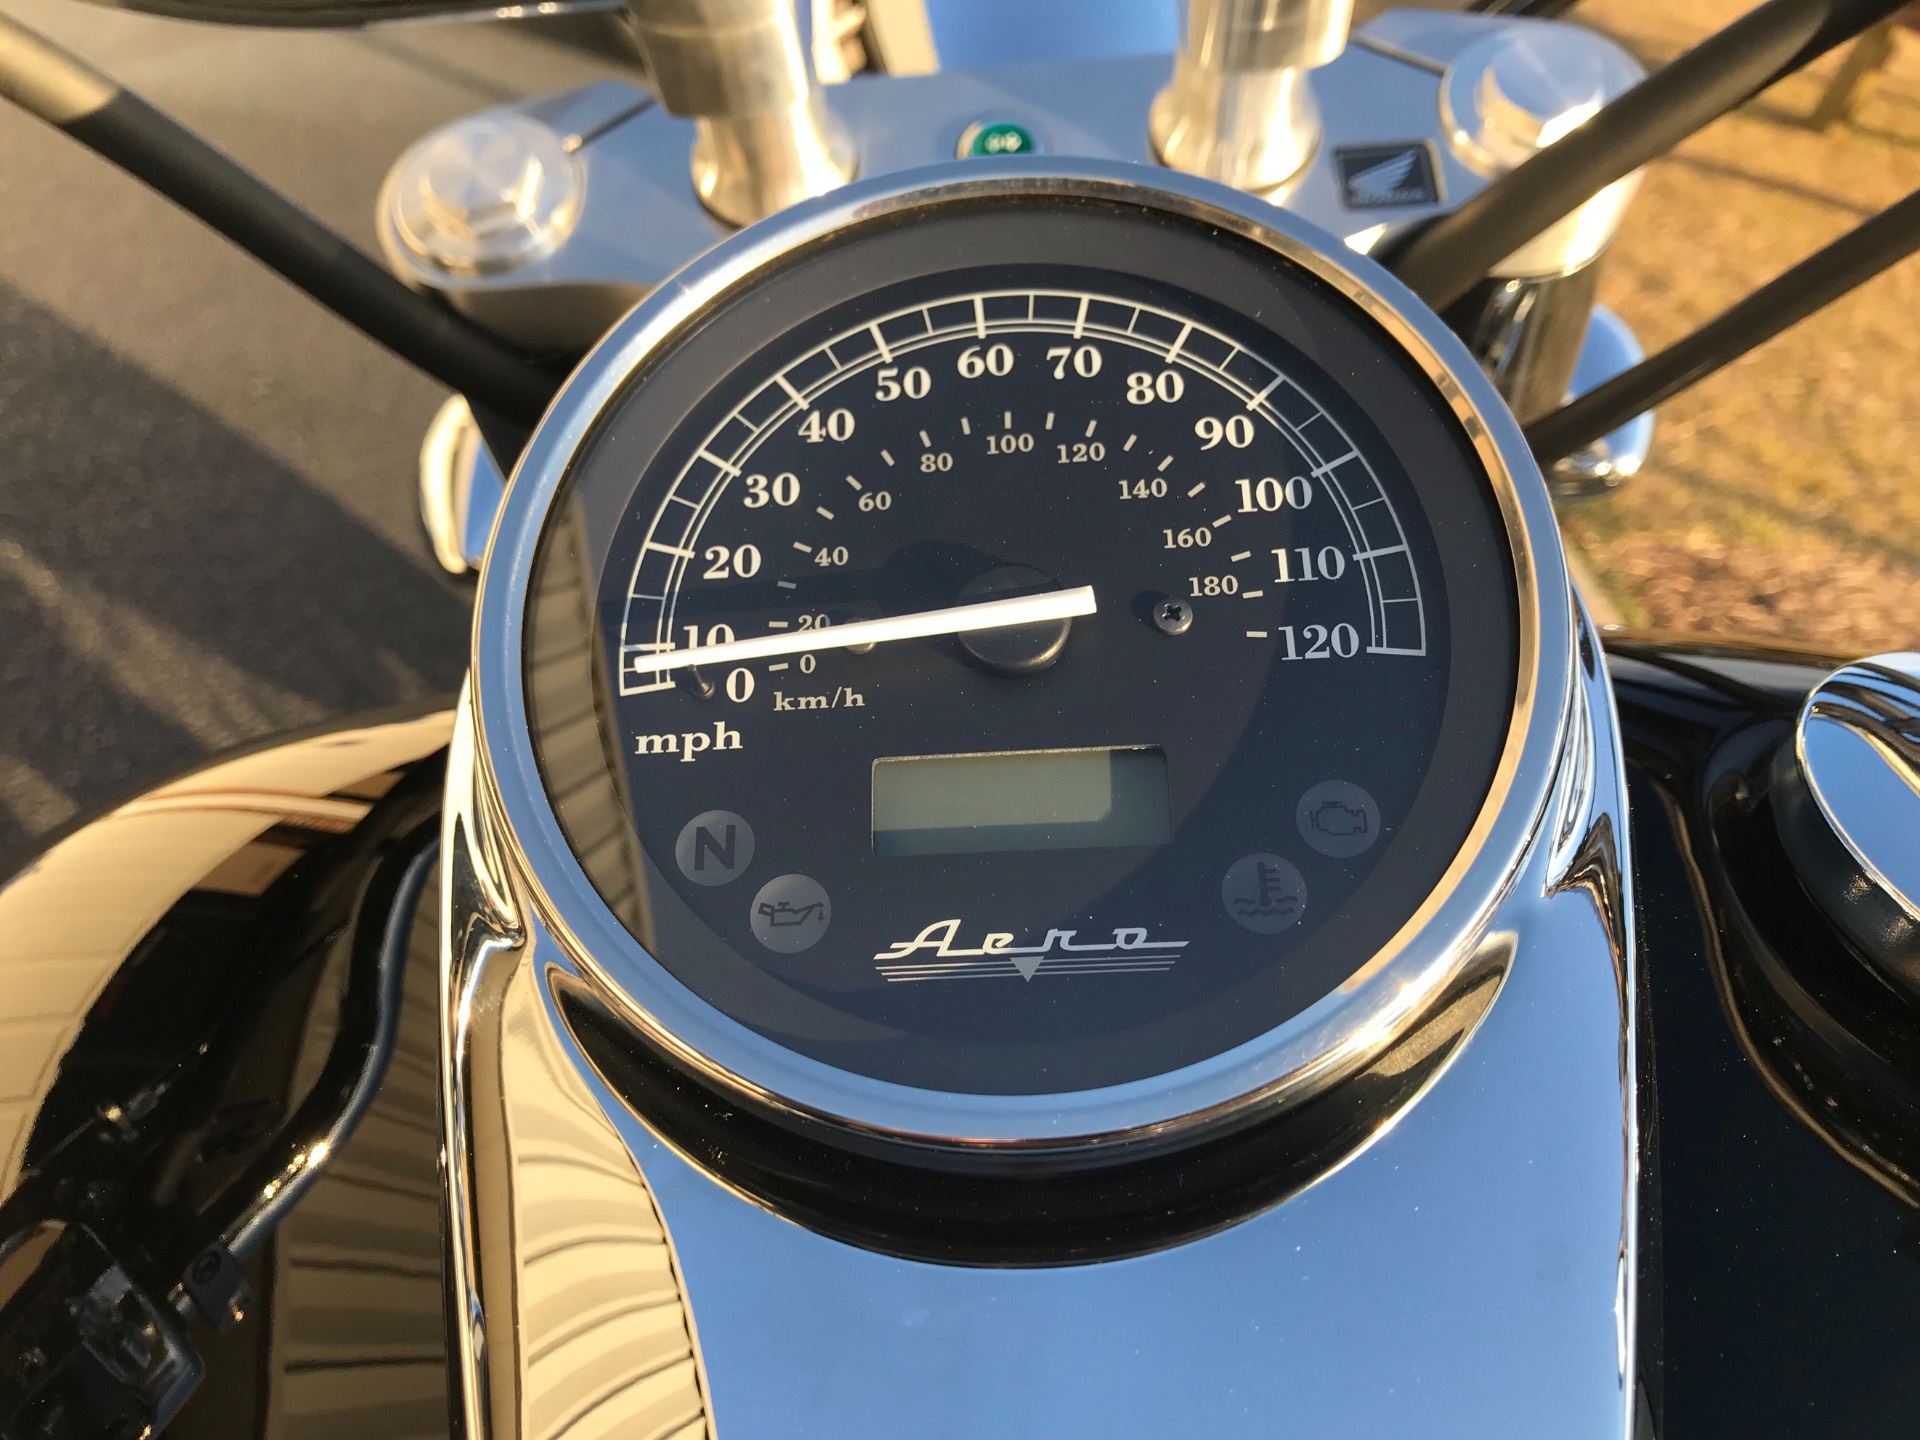 New 2019 Honda Shadow Aero 750 Motorcycles in Greenville ...